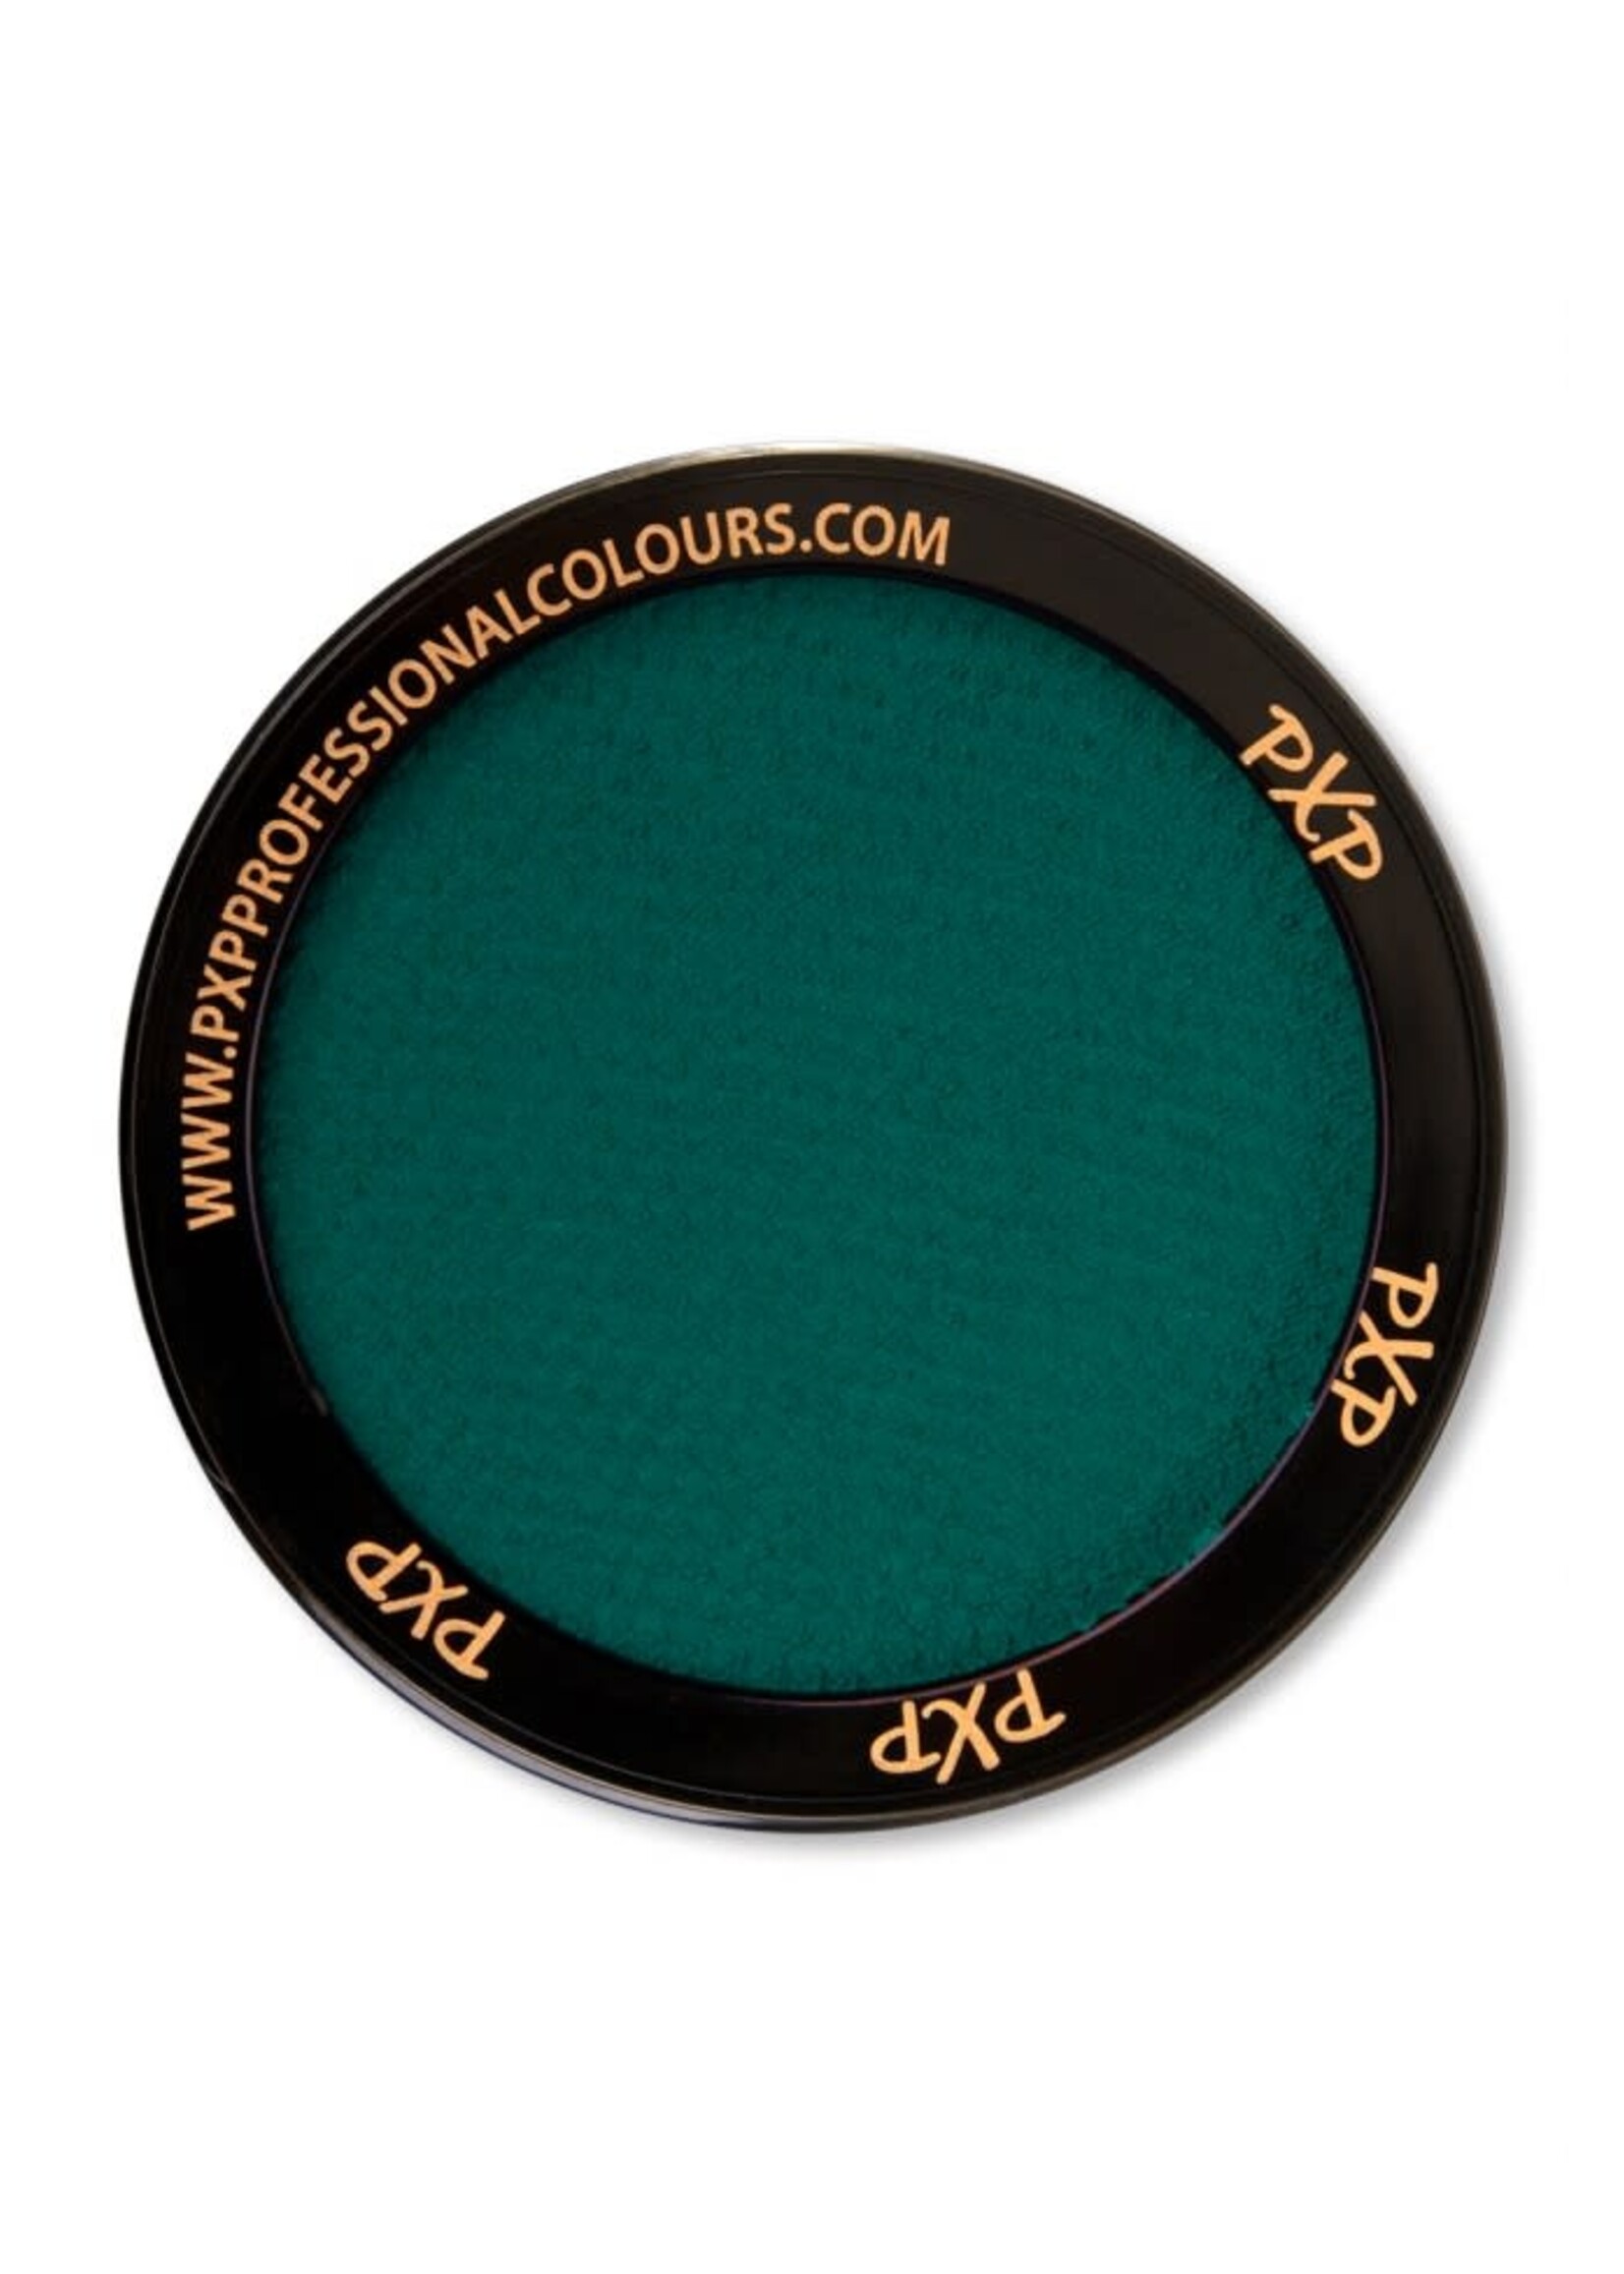 Feestkleding Breda PXP Professional Colours aQua Green 10 gram